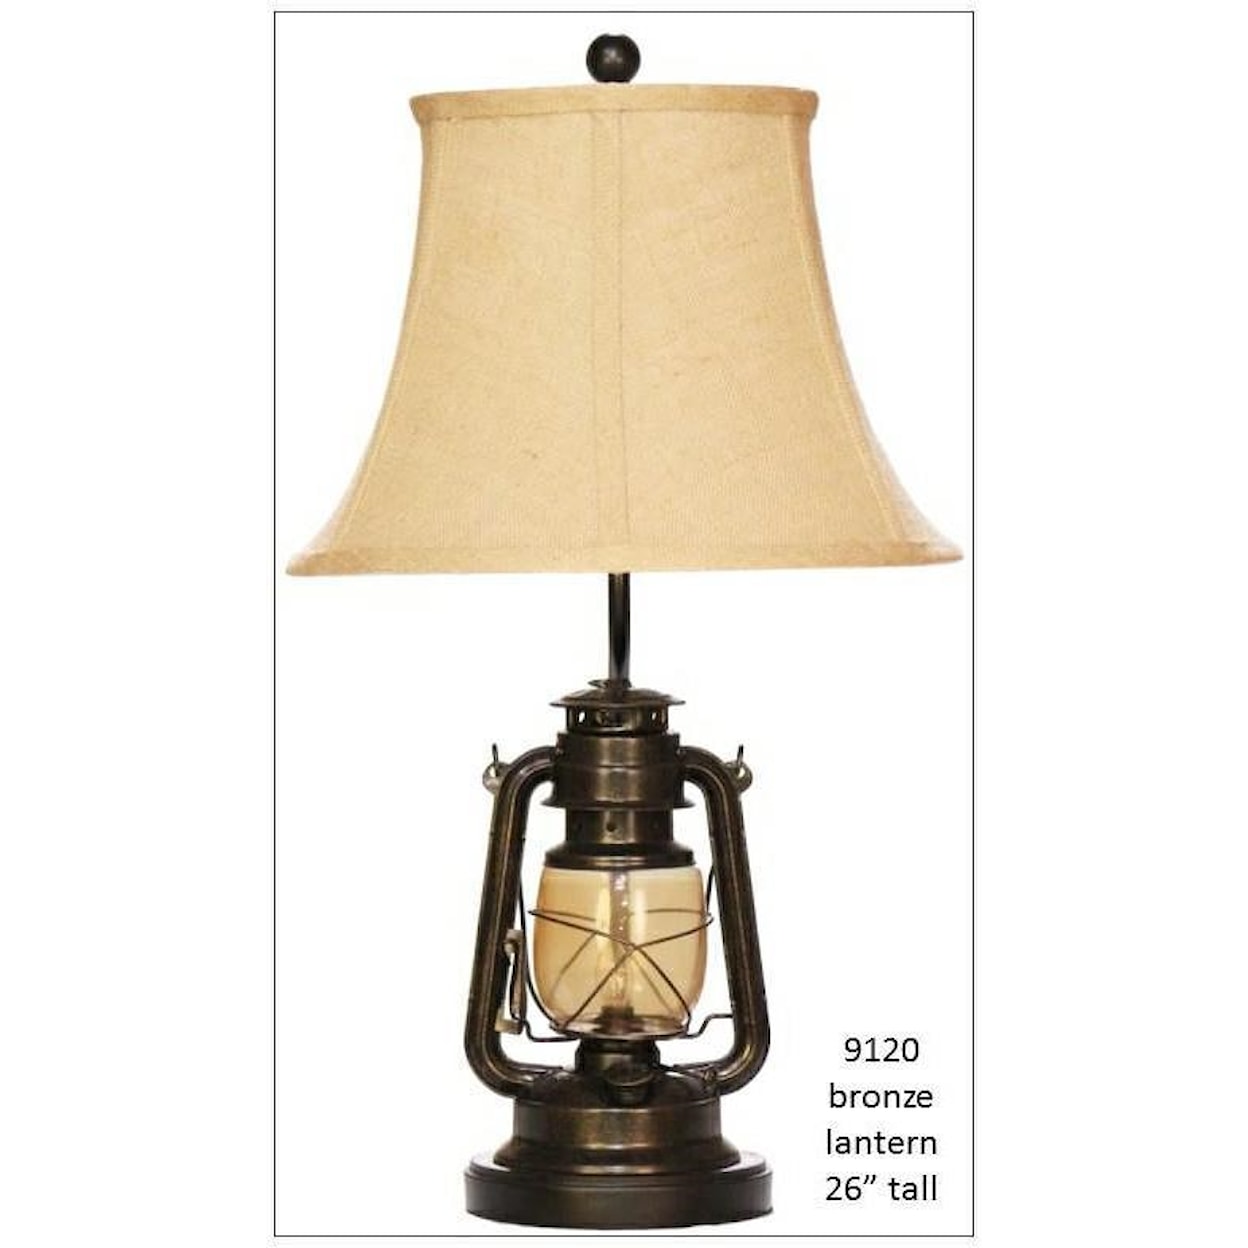 H & H Lamp Company Lamps Bronze Lantern